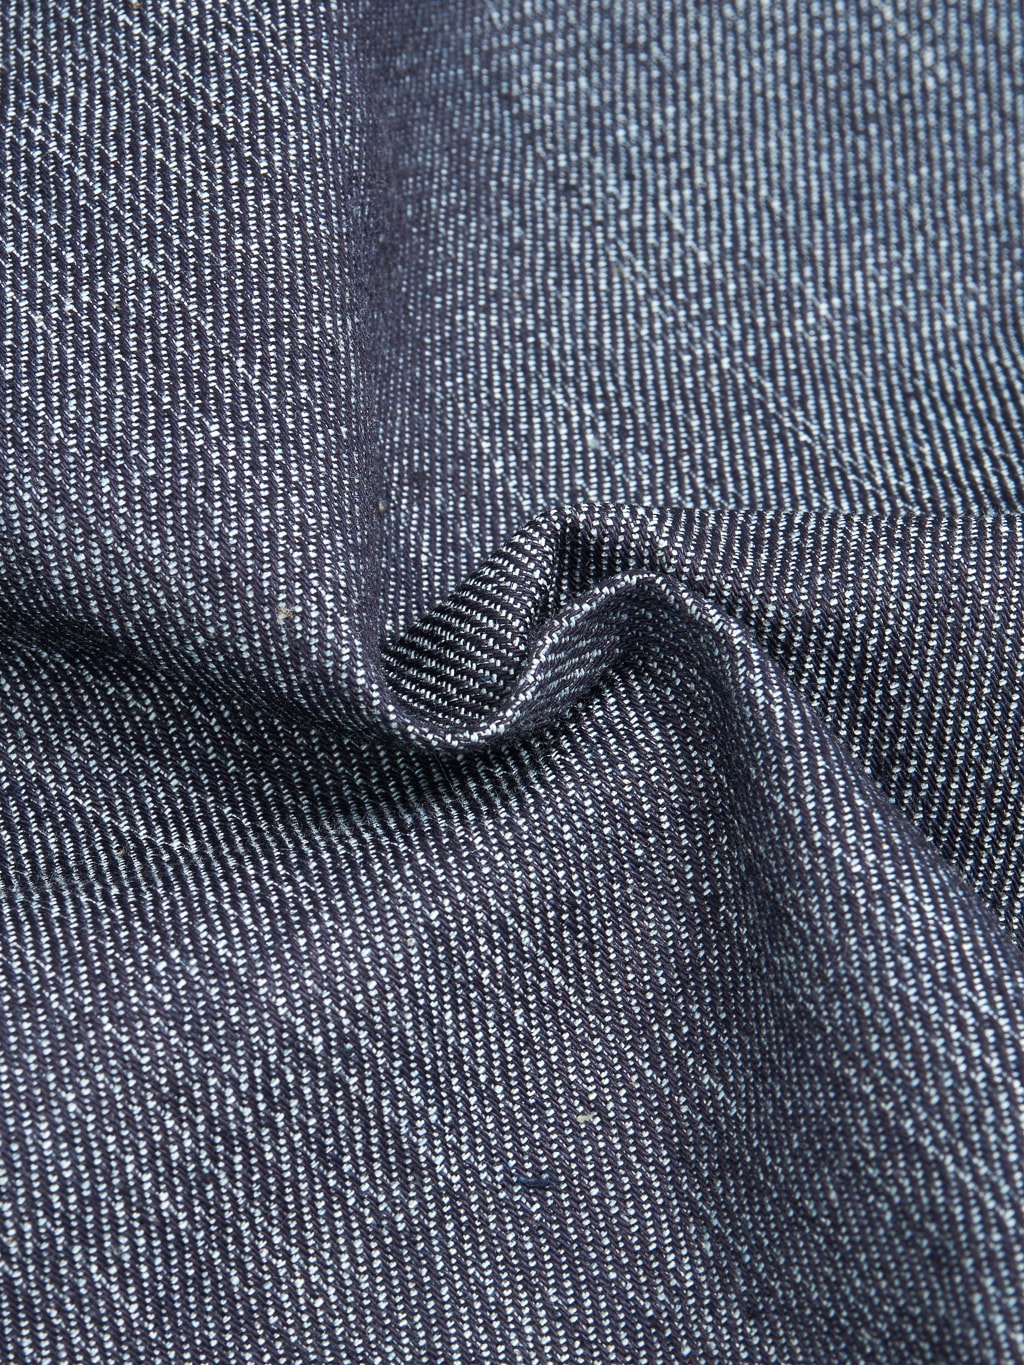 UES Indigo Double Weave denim Shirt  texture